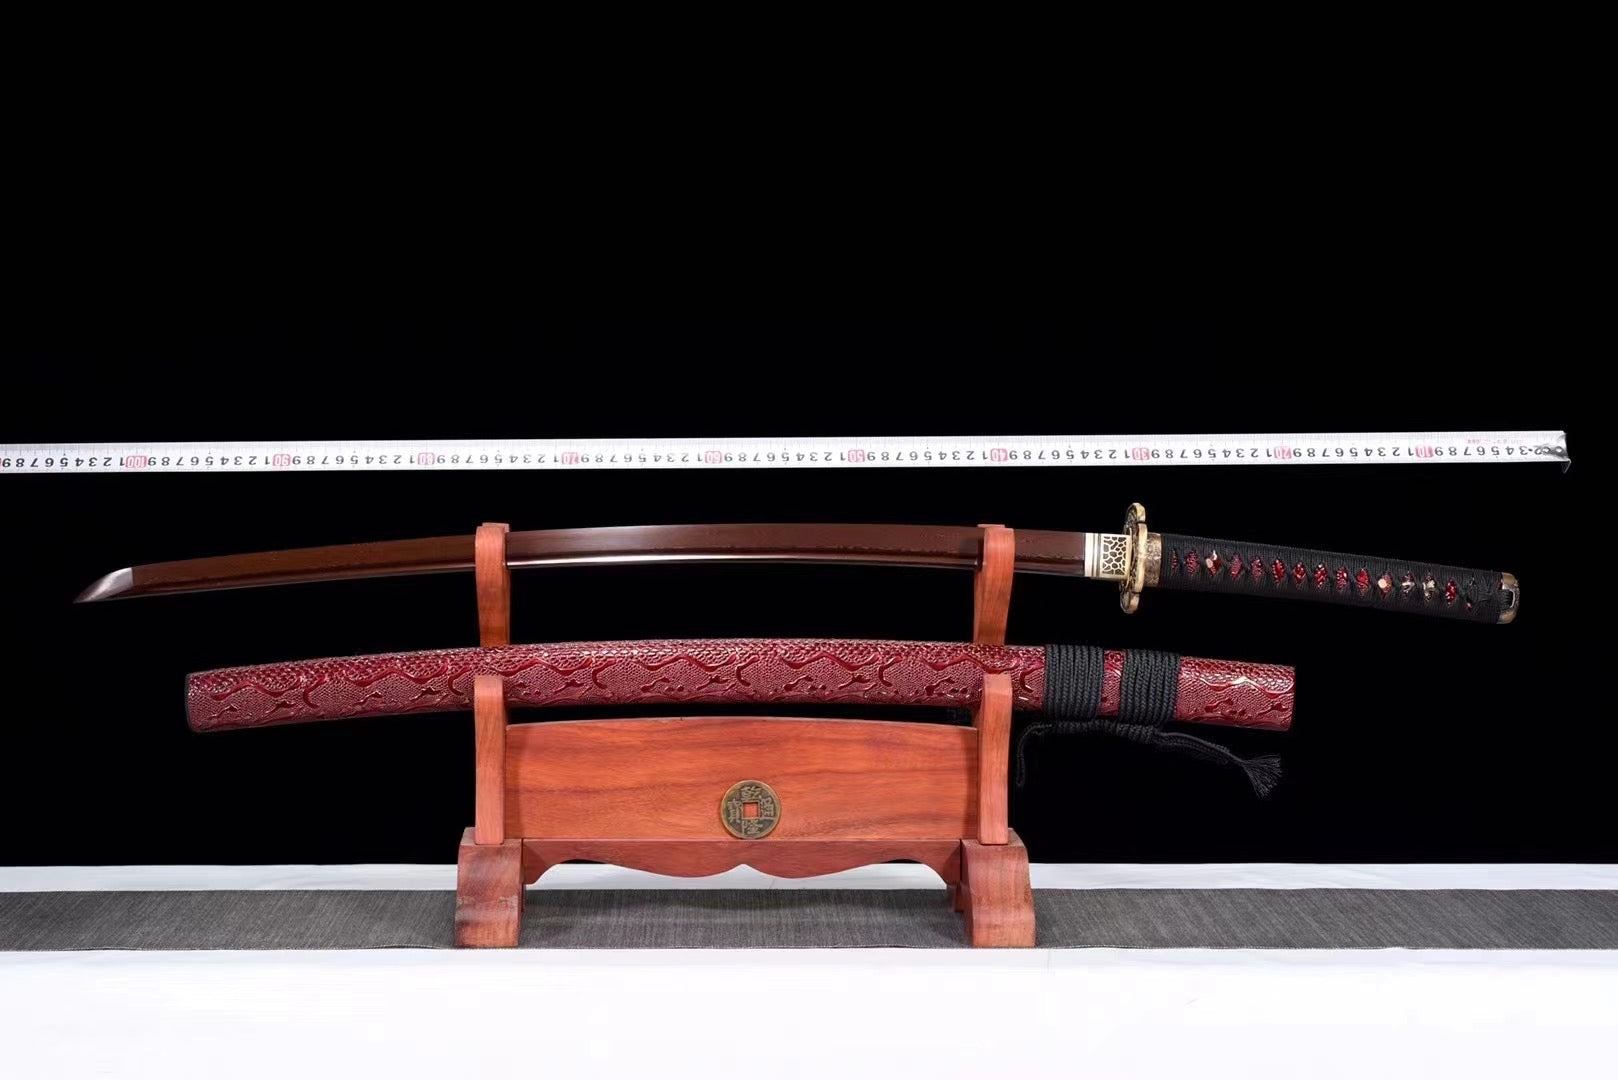 Damascus Steel Ghost Cut Katana Sword,Real Handmade Japanese Samurai Sword Full Tang